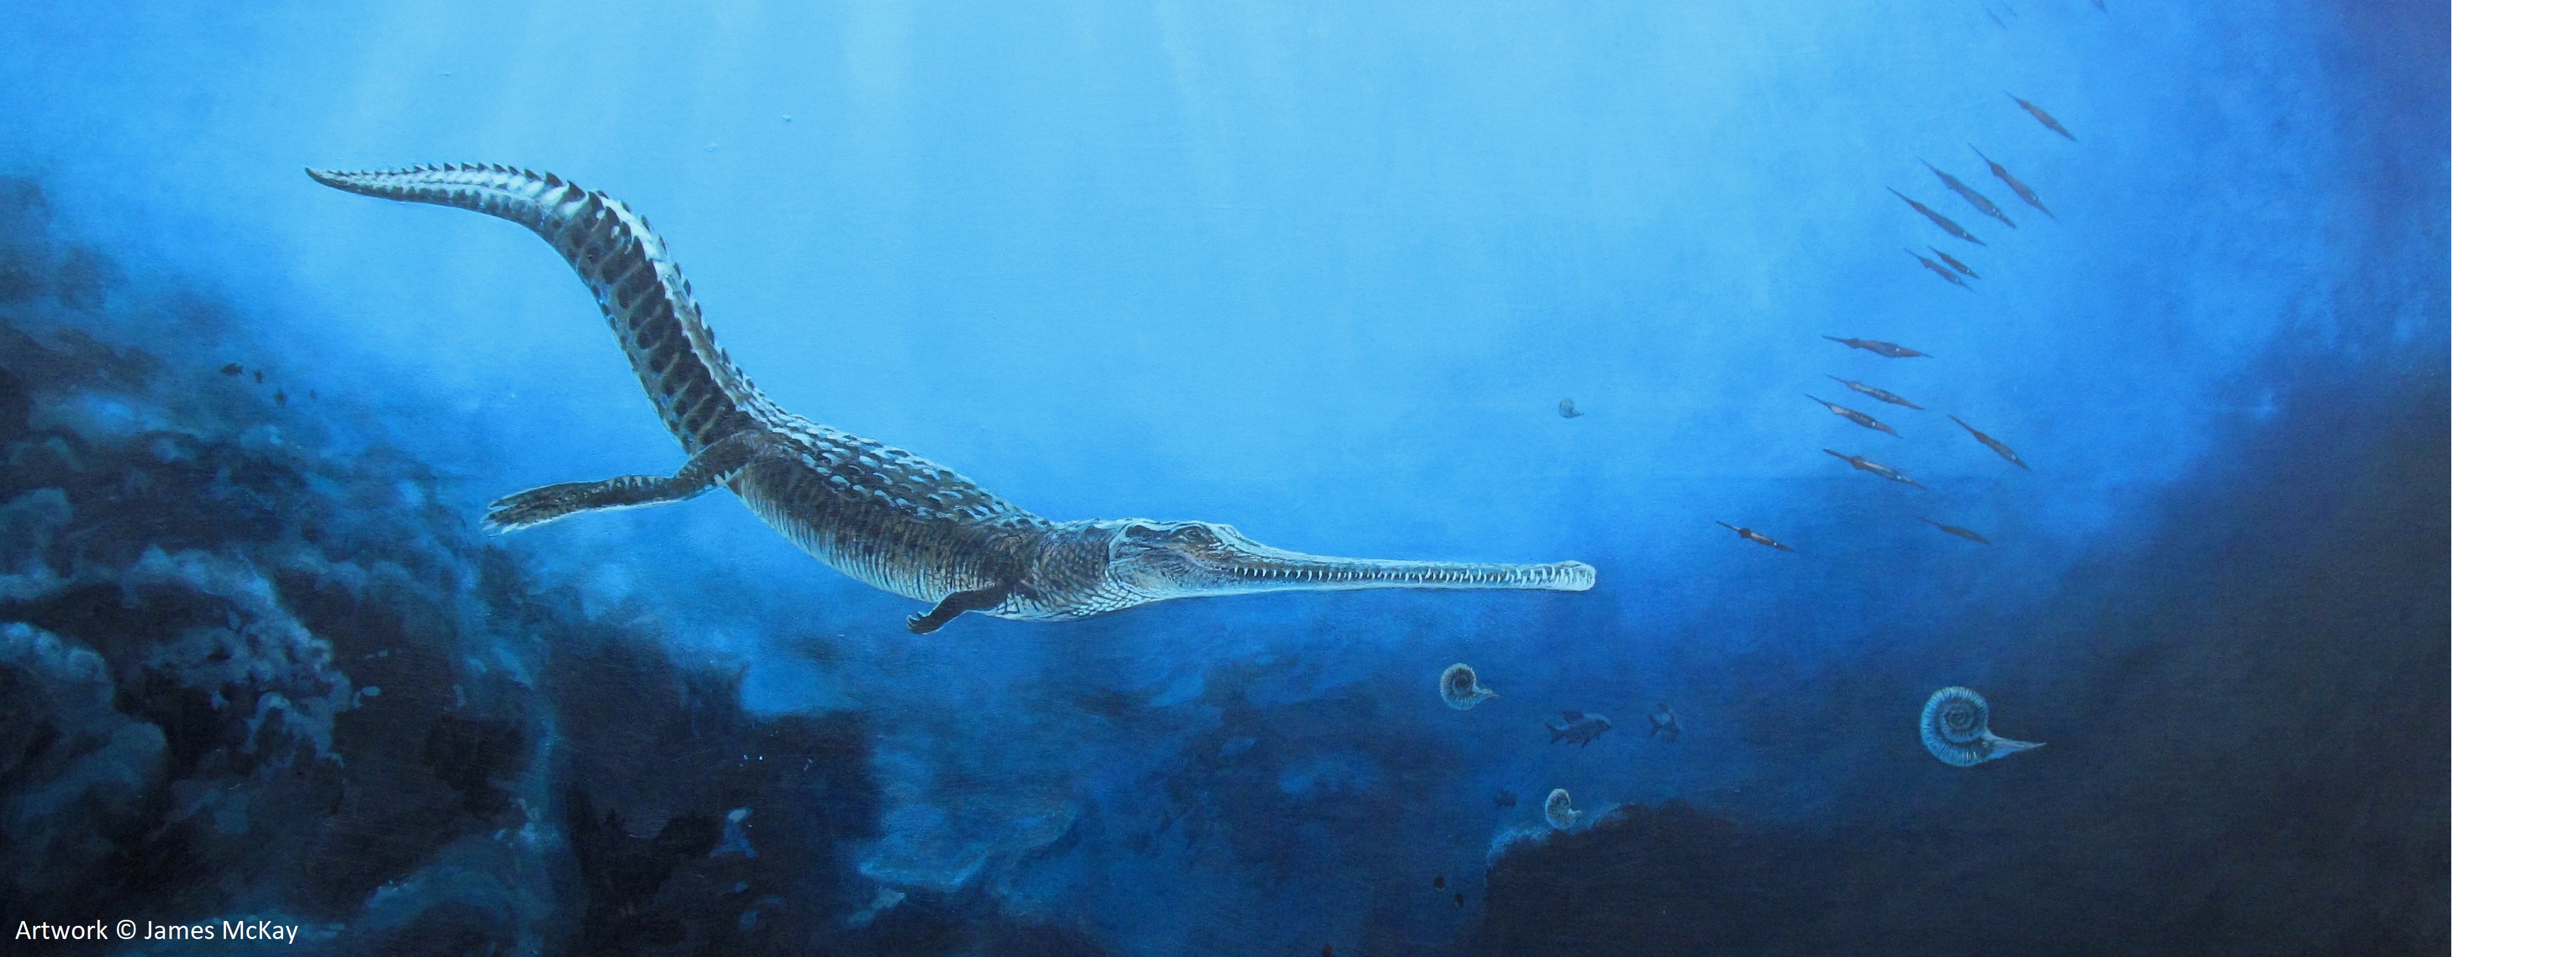 A Toarcian marine crocodile illustrated by James McKay